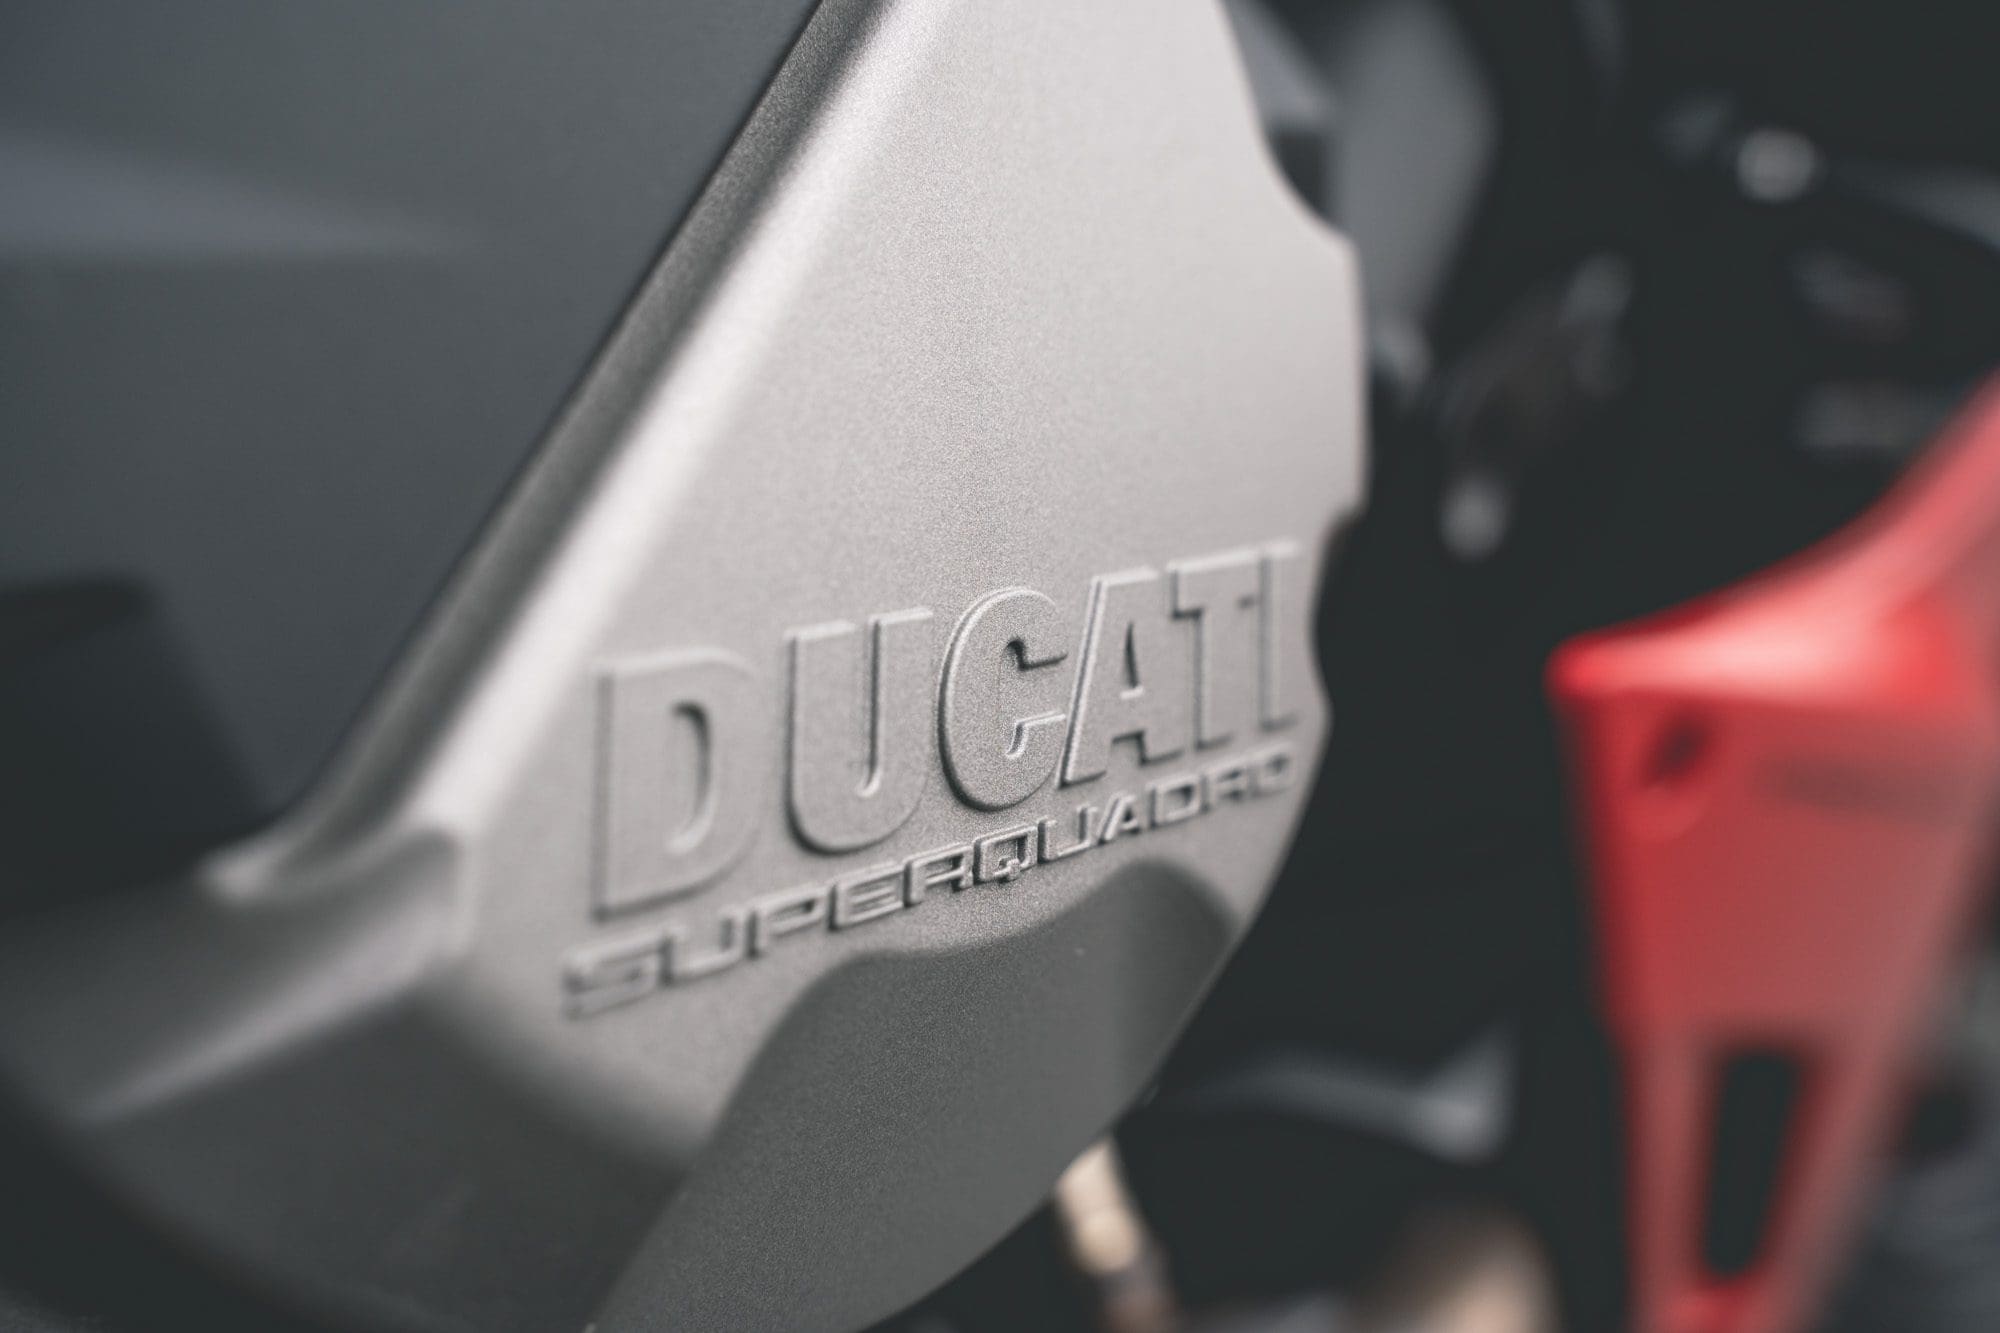 Streetfighter V2, Italiaans kunstwerk: de nieuwe <strong>Ducati Streetfighter V2</strong>